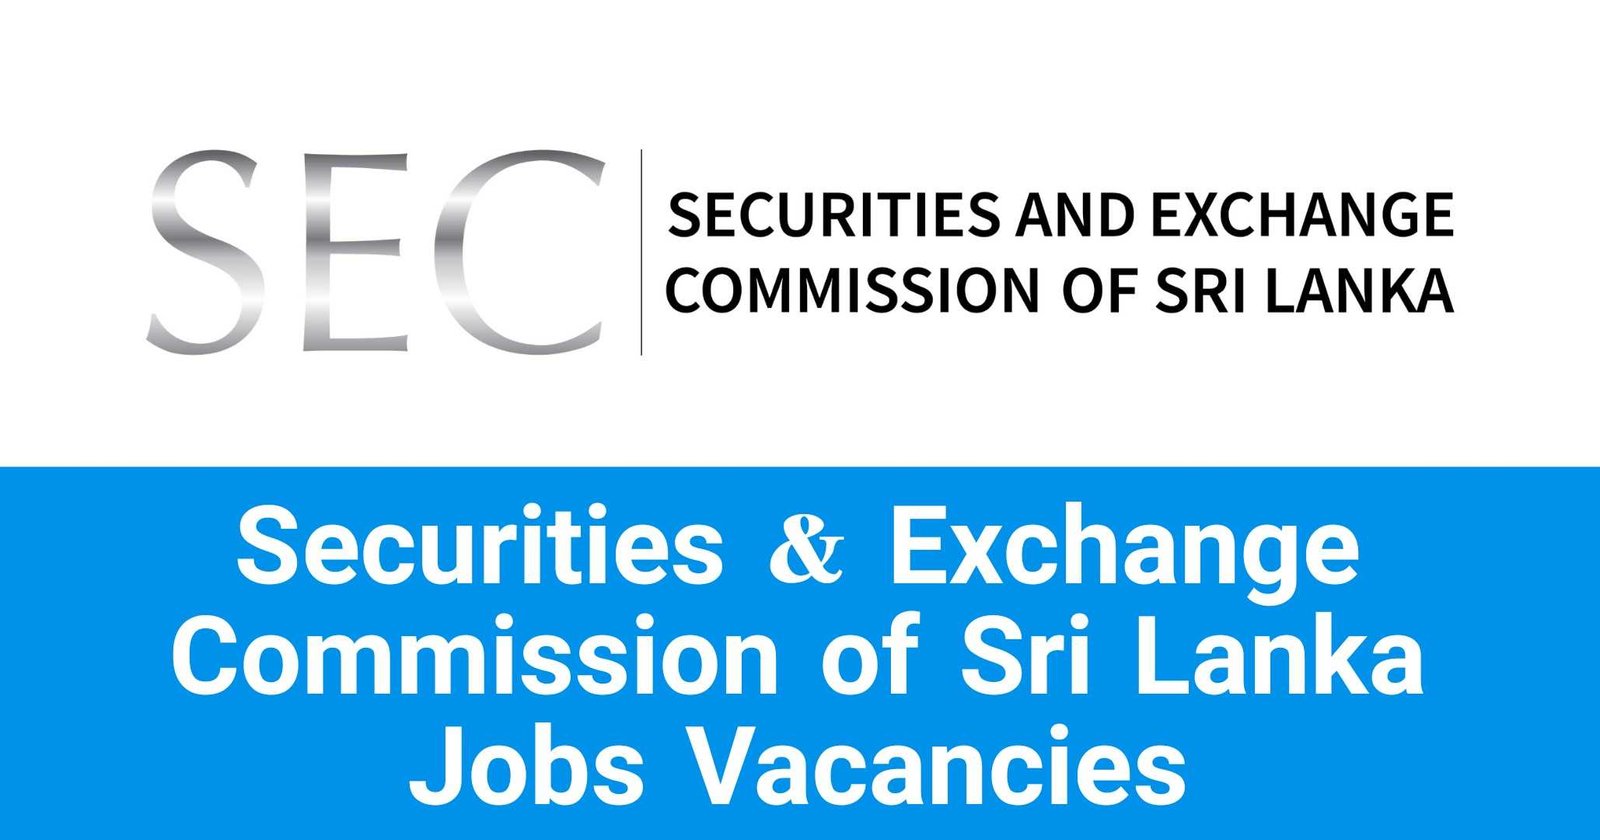 Securities & Exchange Commission of Sri Lanka Jobs Vacancies Careers